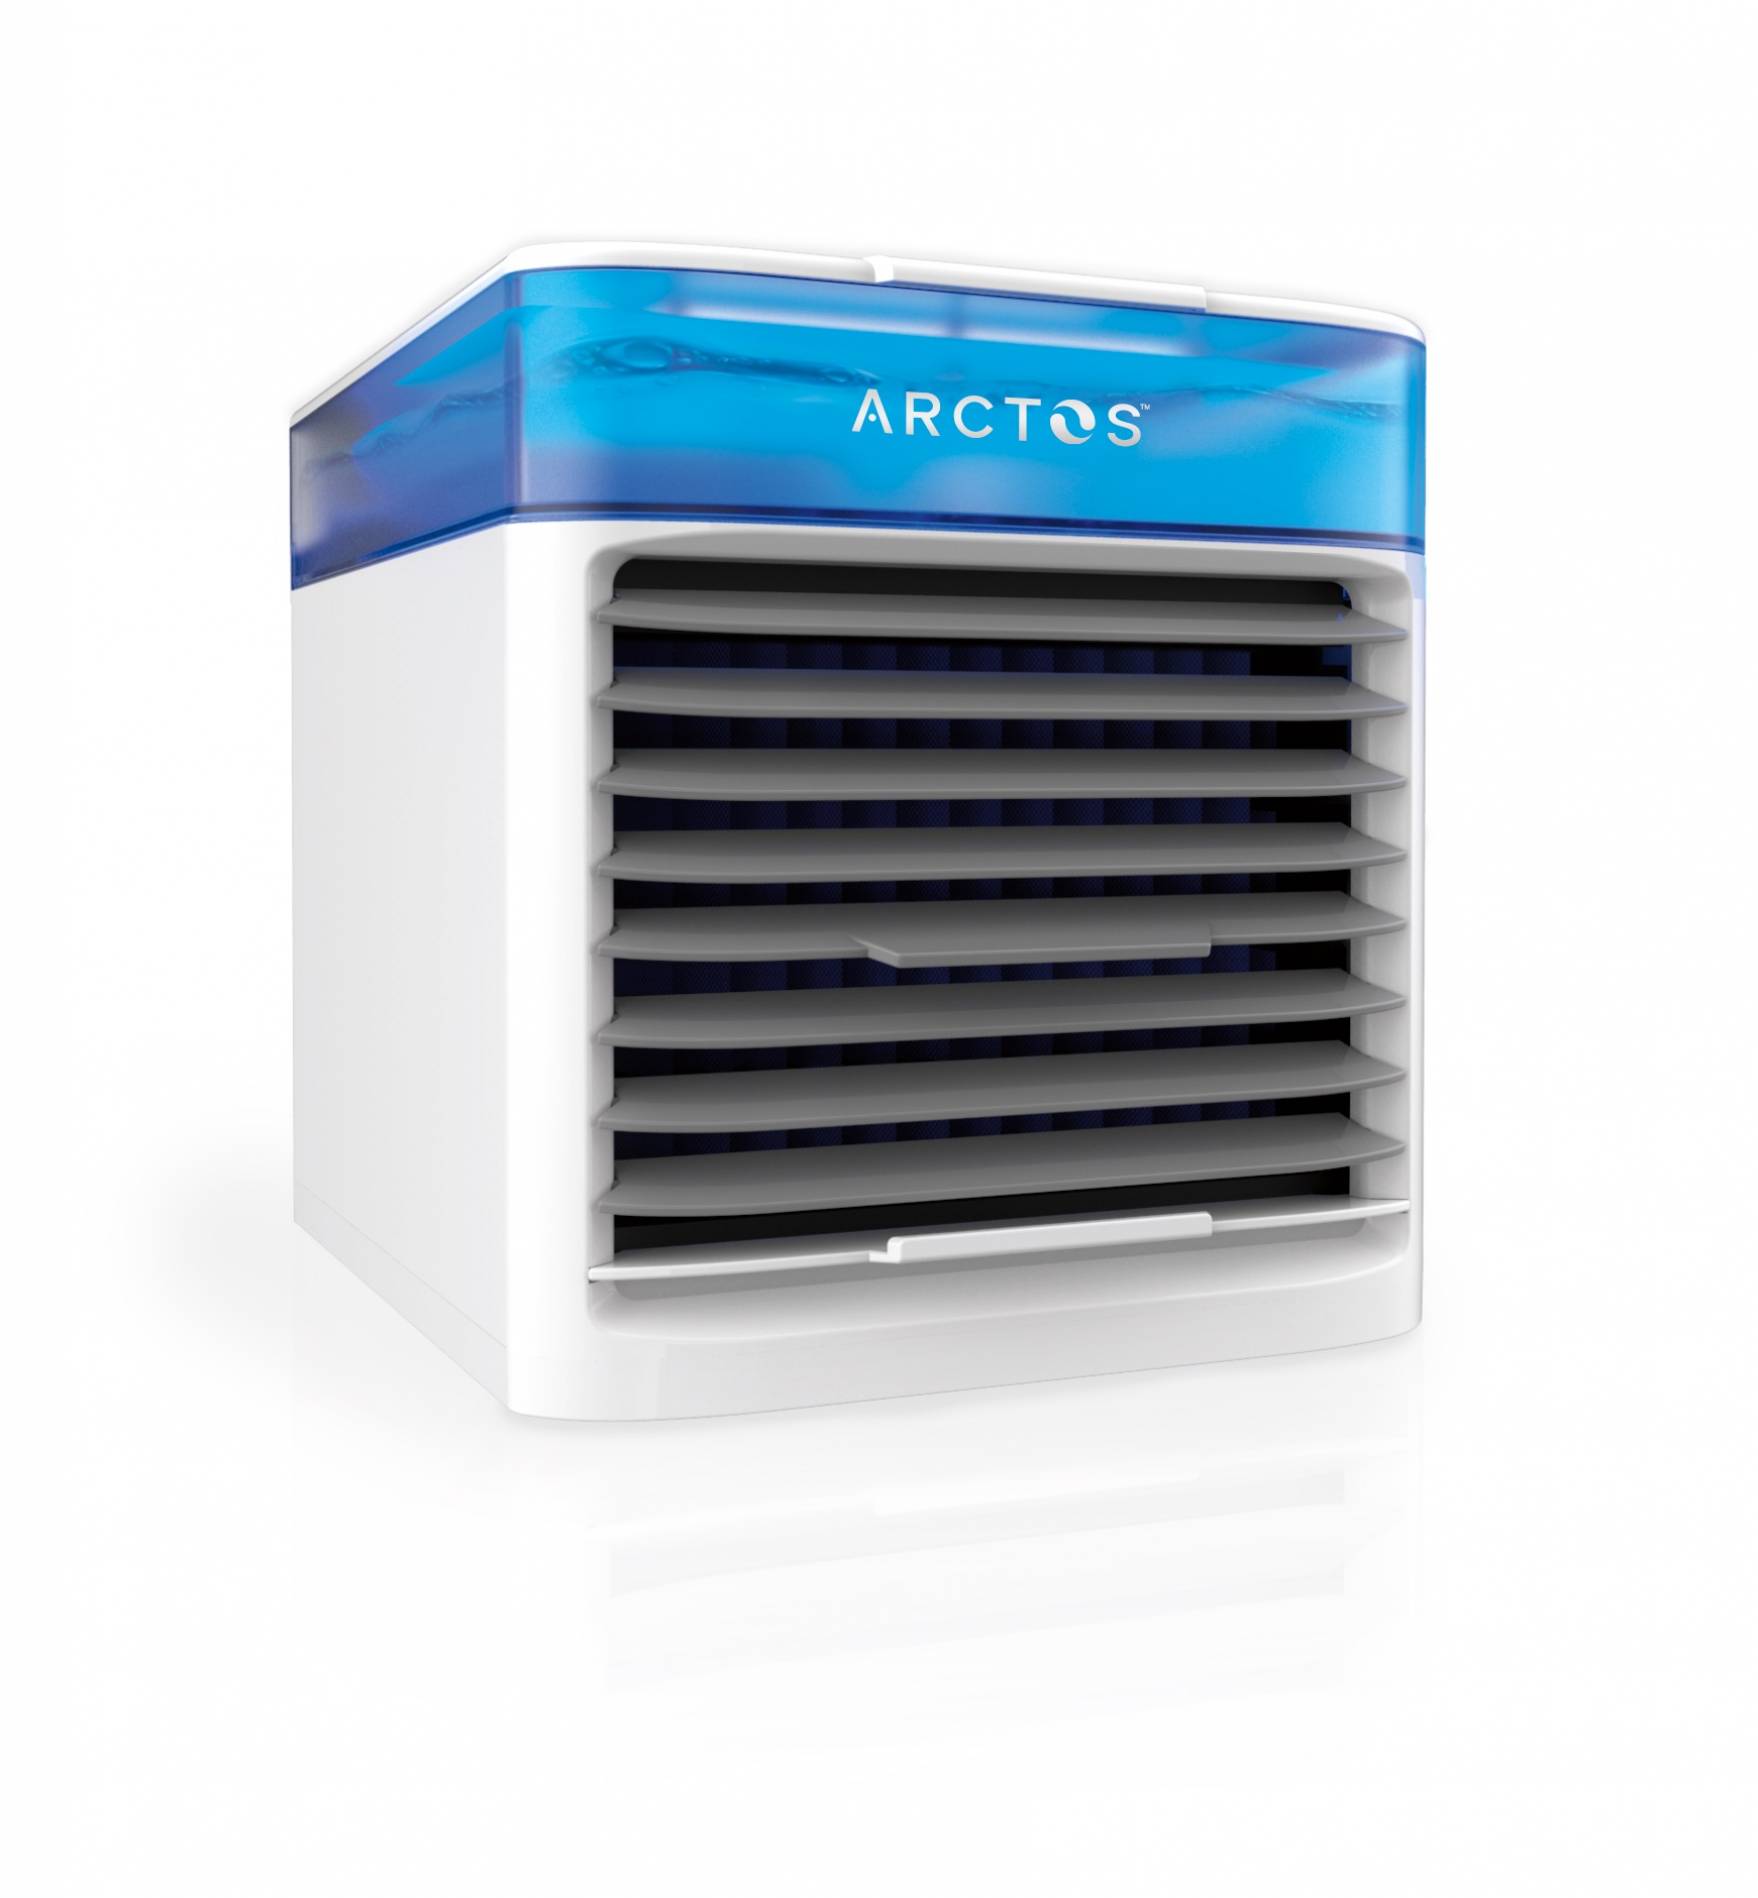 Where To Buy Arctos Cooler